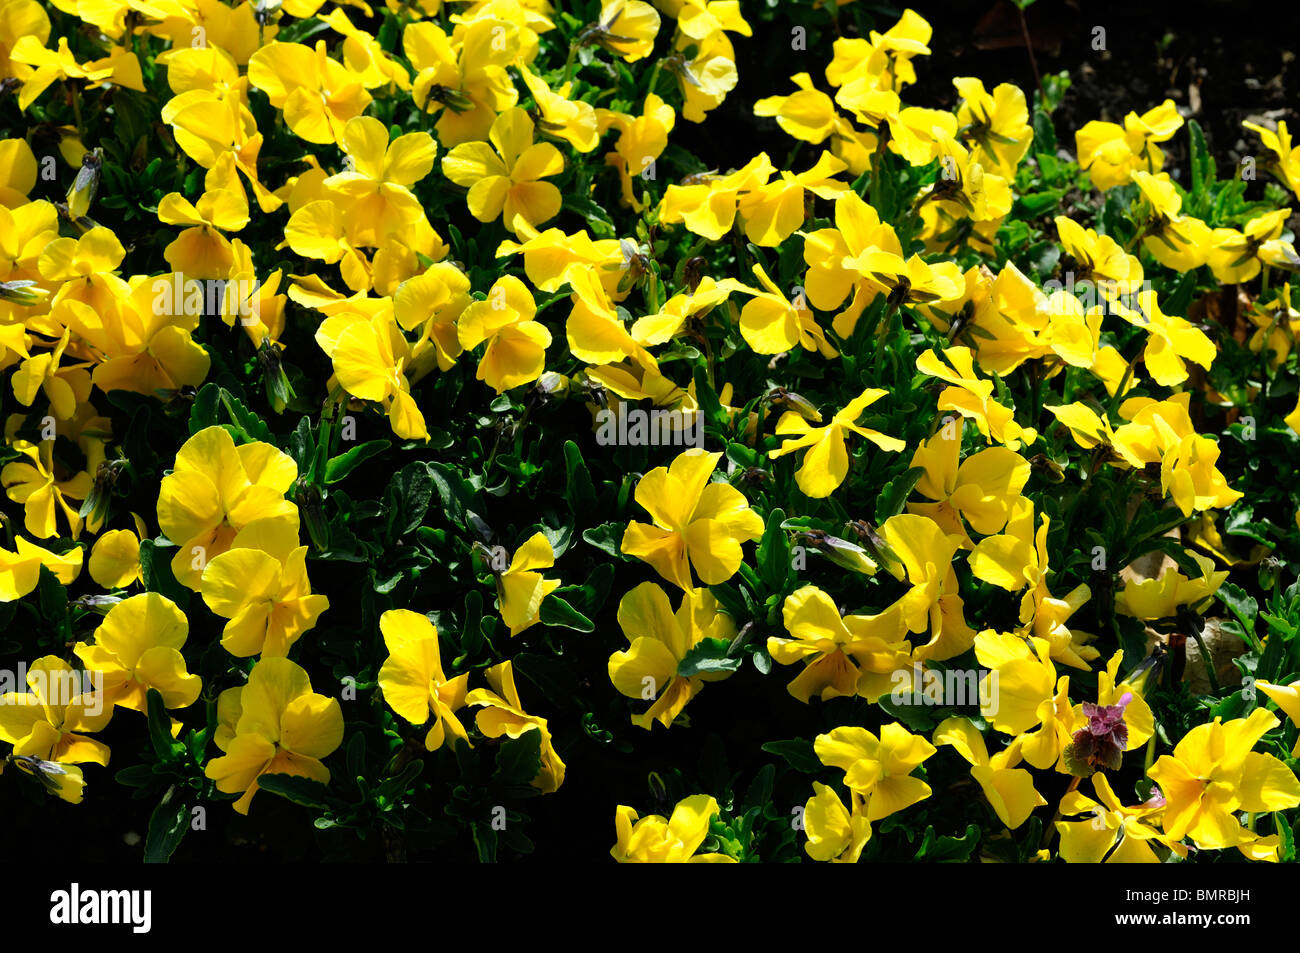 Viola pansy 'Prince John ' Spring flower annual yellow garden plant display en masse mass group Stock Photo